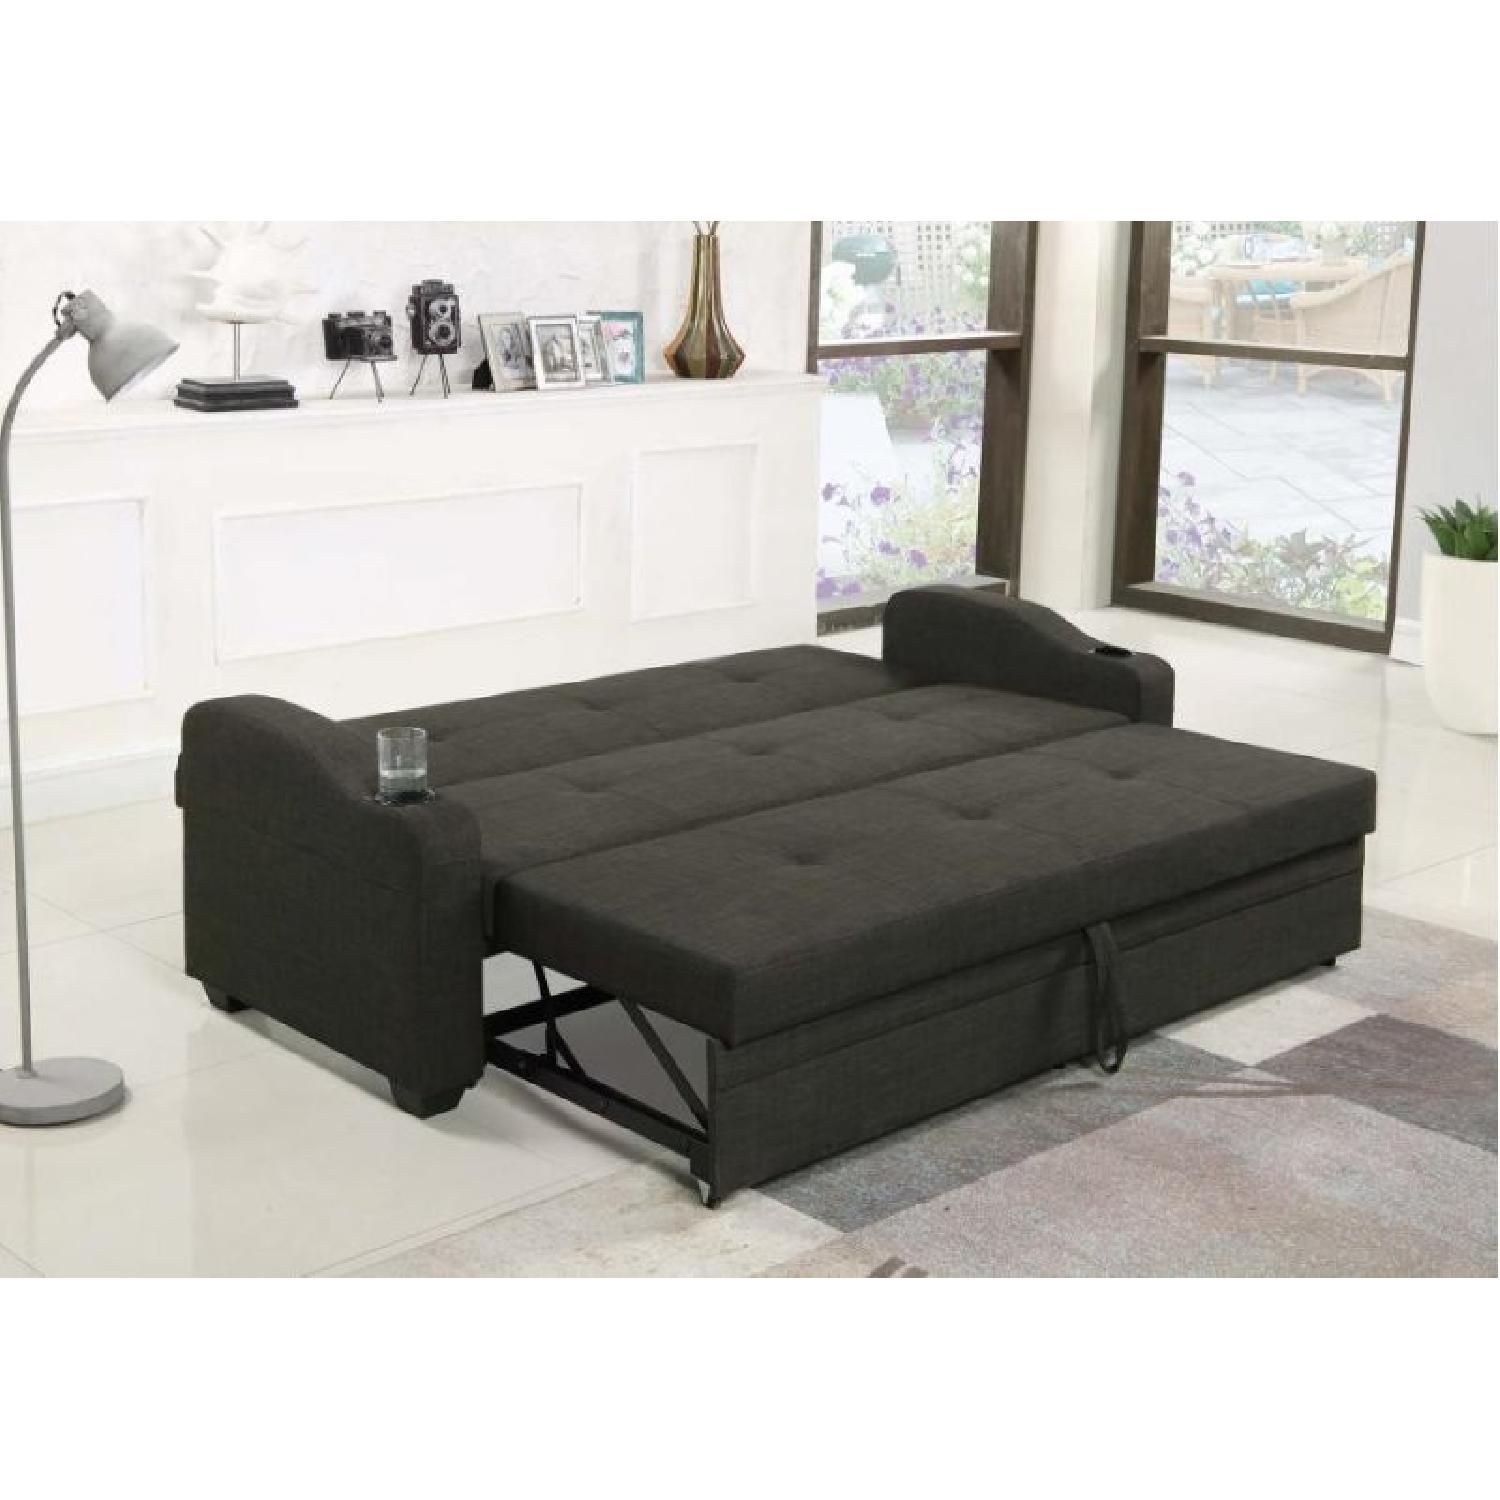 Charcoal Grey Pull Out Sleeper Sofa – Aptdeco Regarding 3 In 1 Gray Pull Out Sleeper Sofas (View 14 of 20)